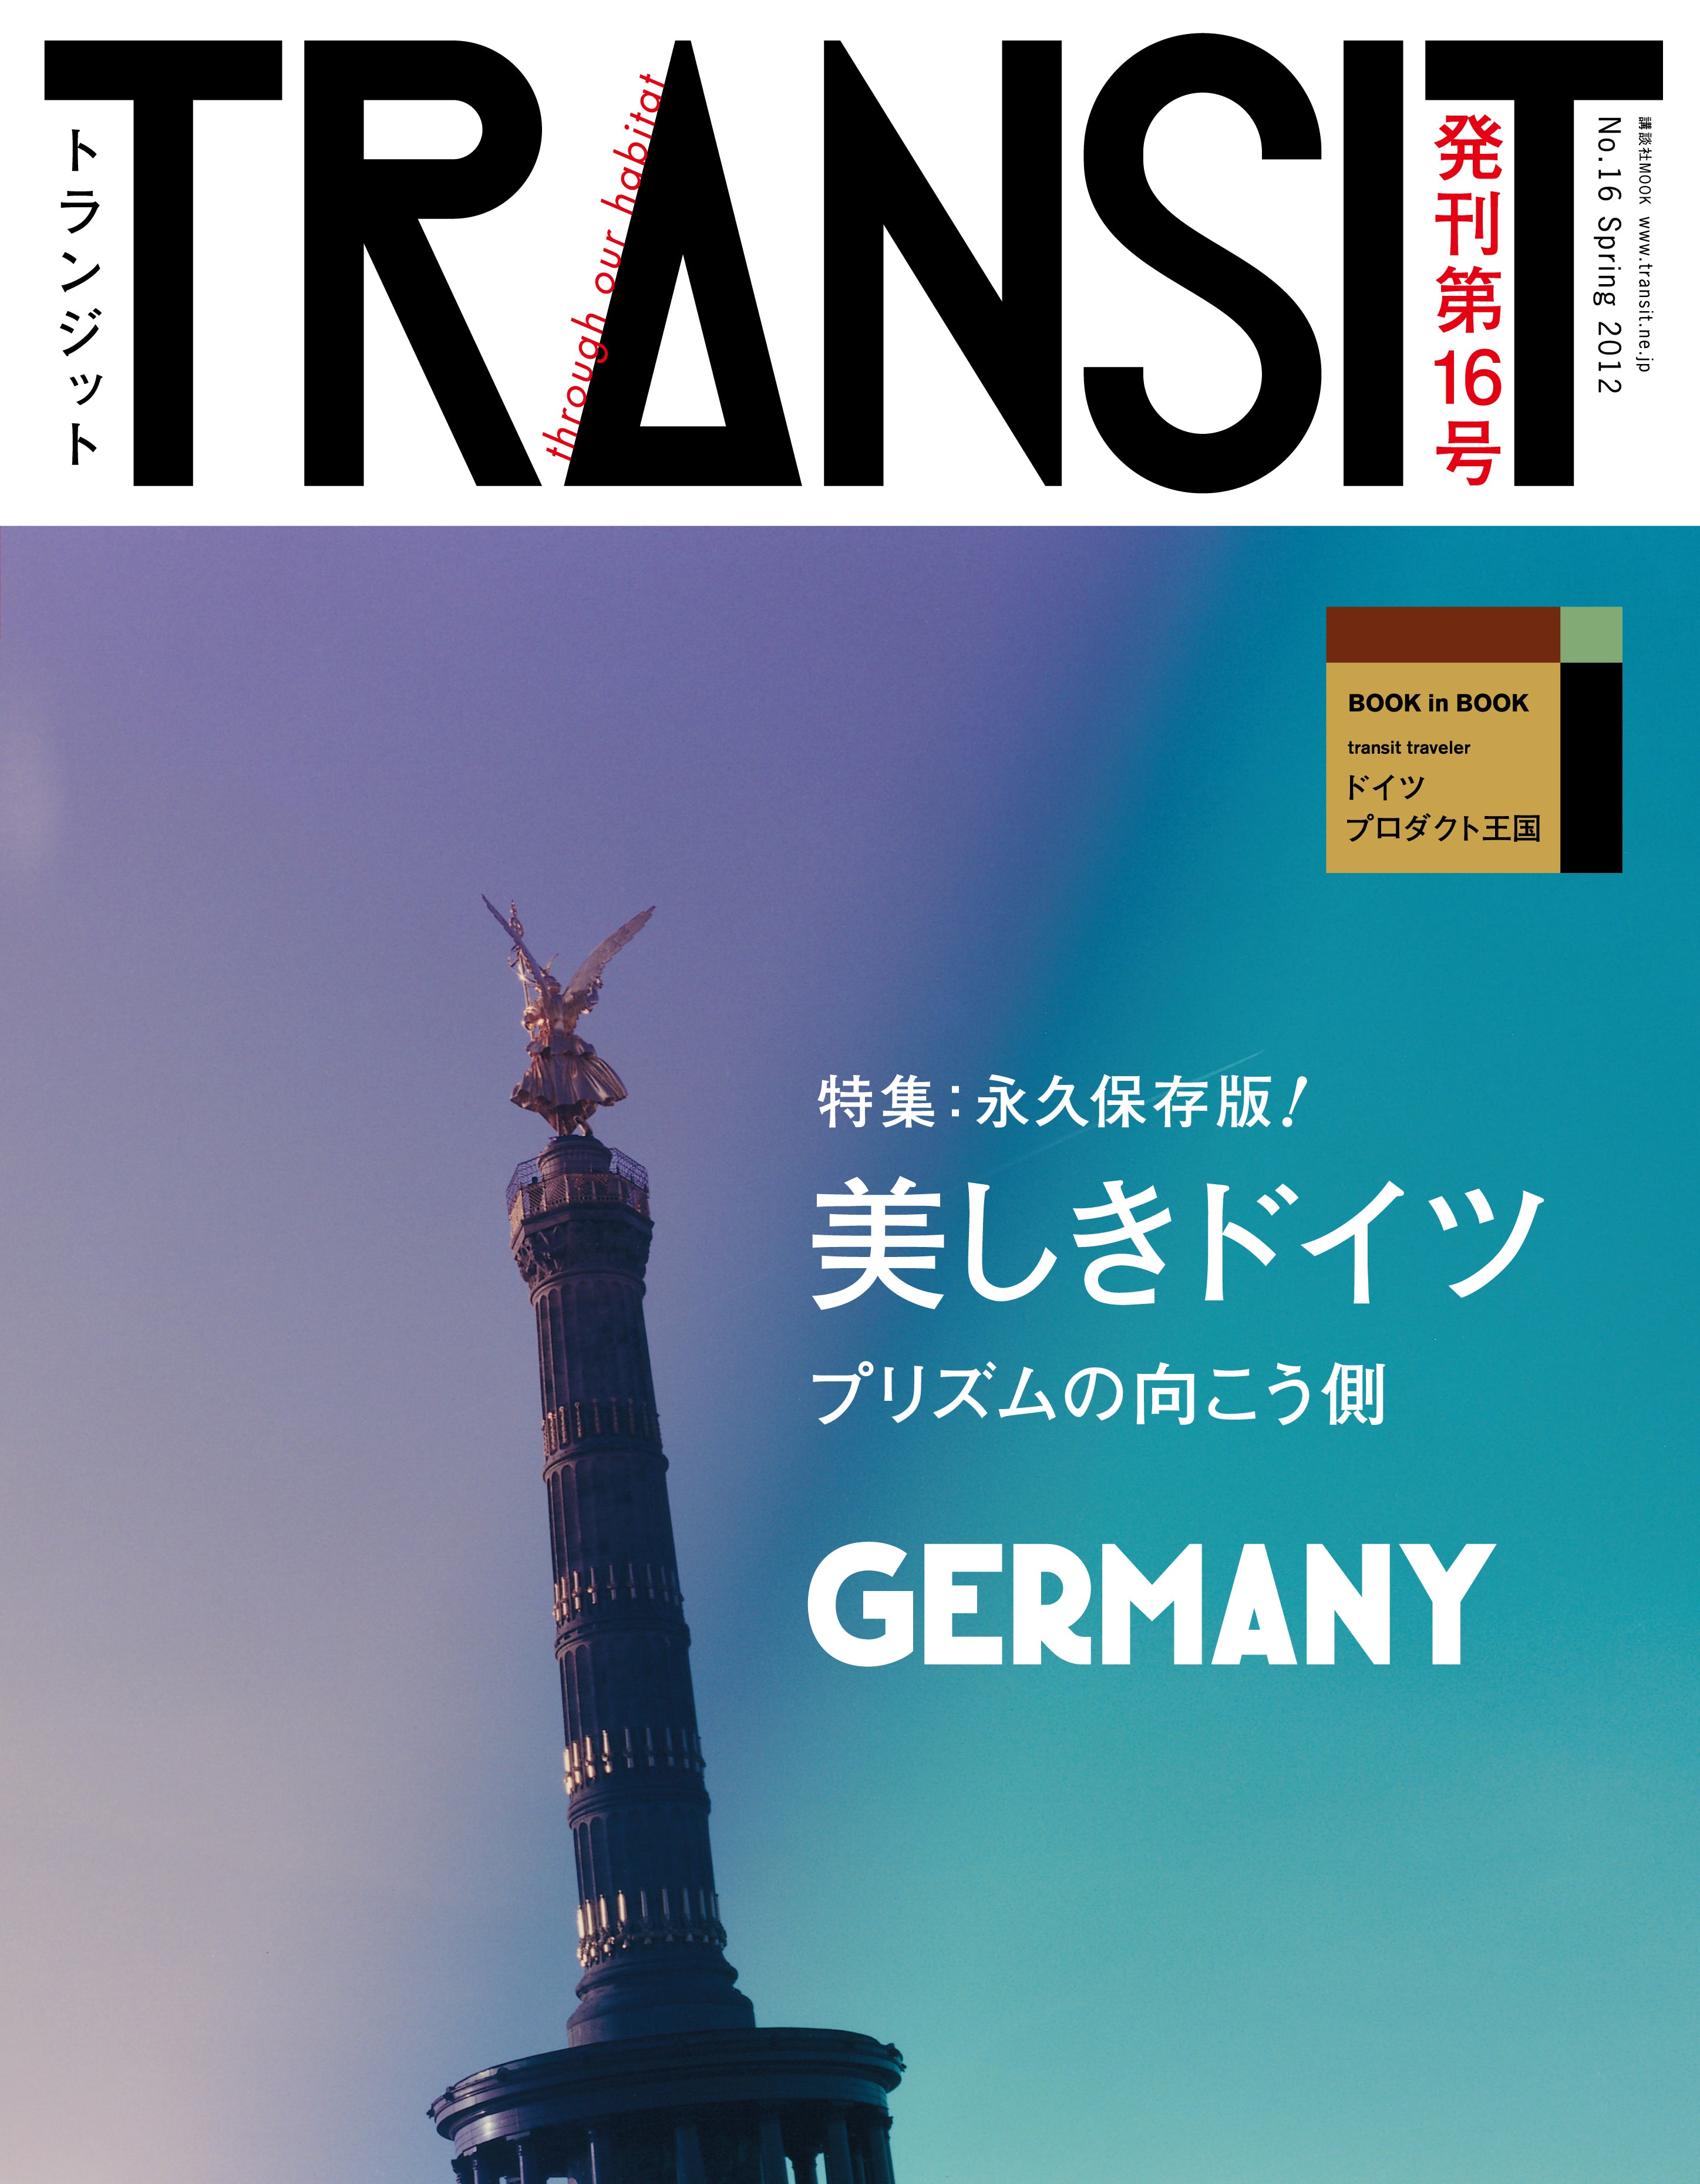 TRANSIT 最新号・バックナンバー – Page 4 – TRANSIT STORE